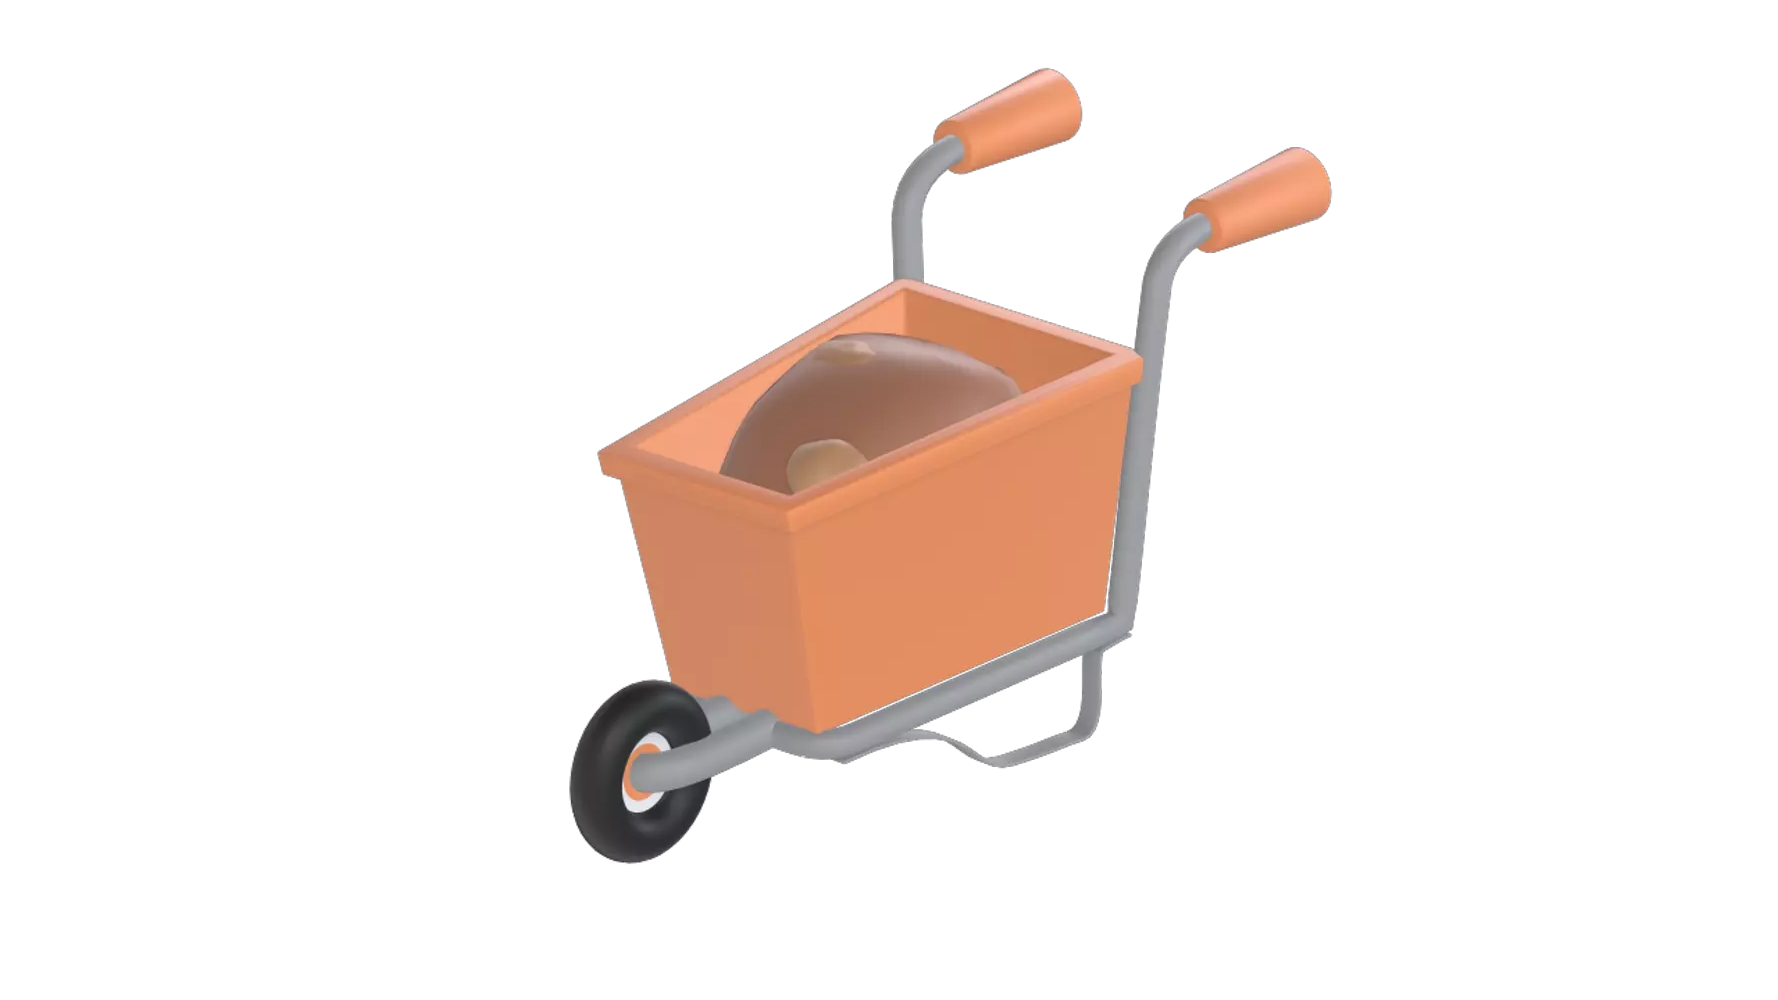 Wheelbarrow 3D Graphic